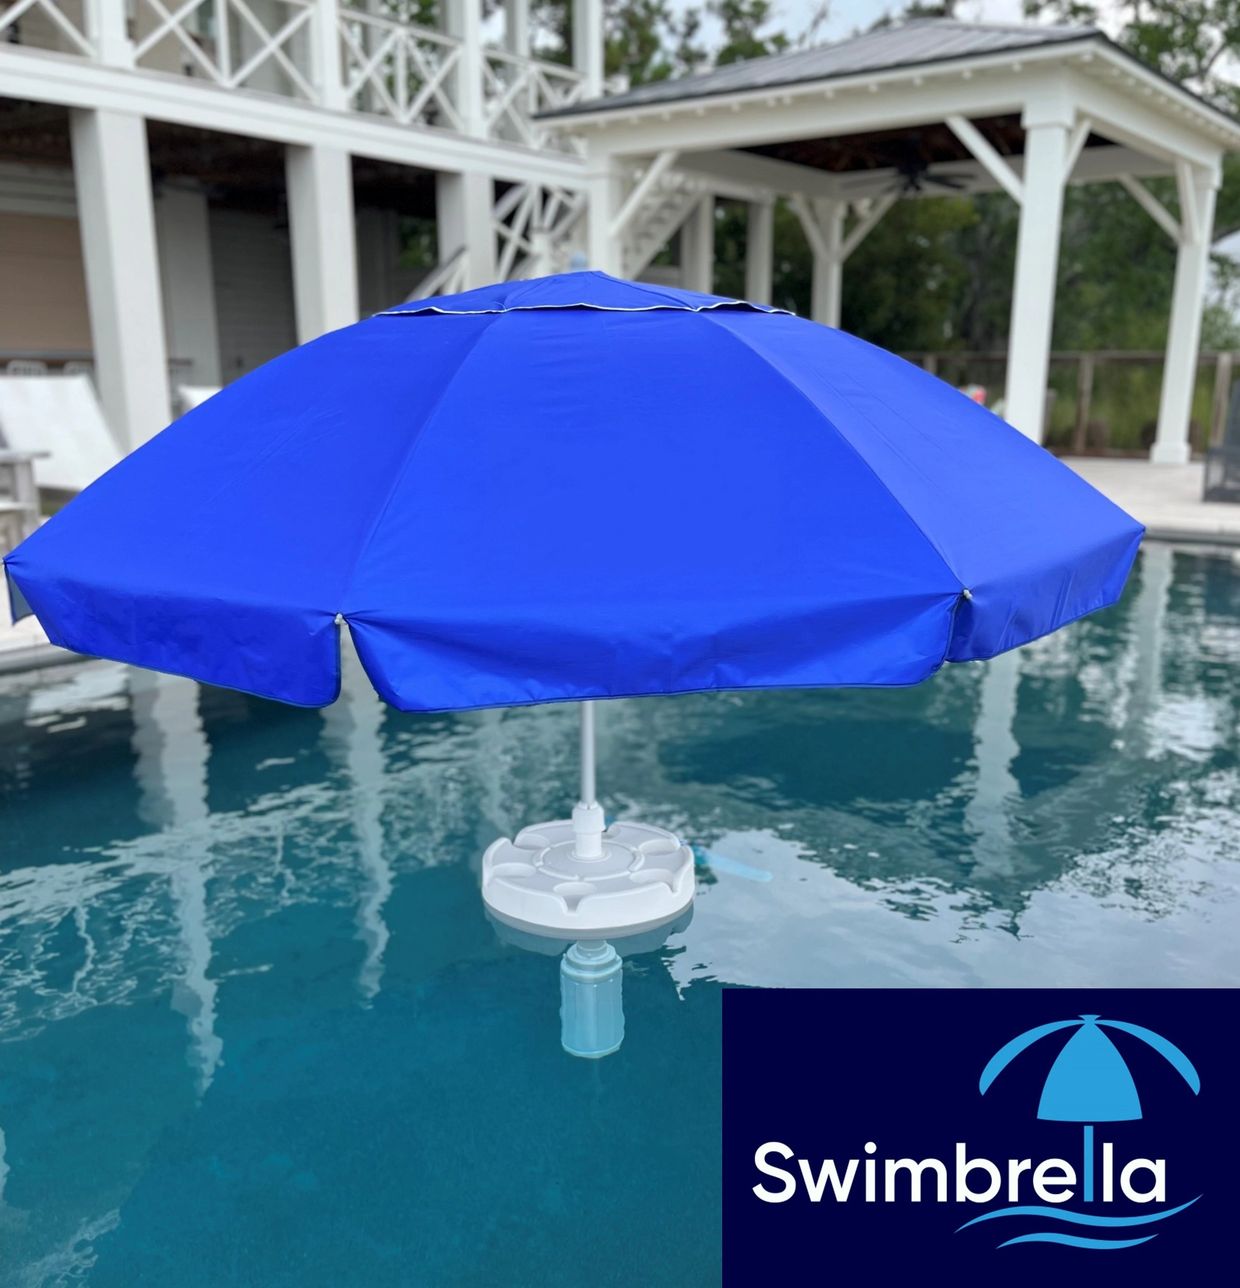 Swimbrella - Floating Umbrella Stand